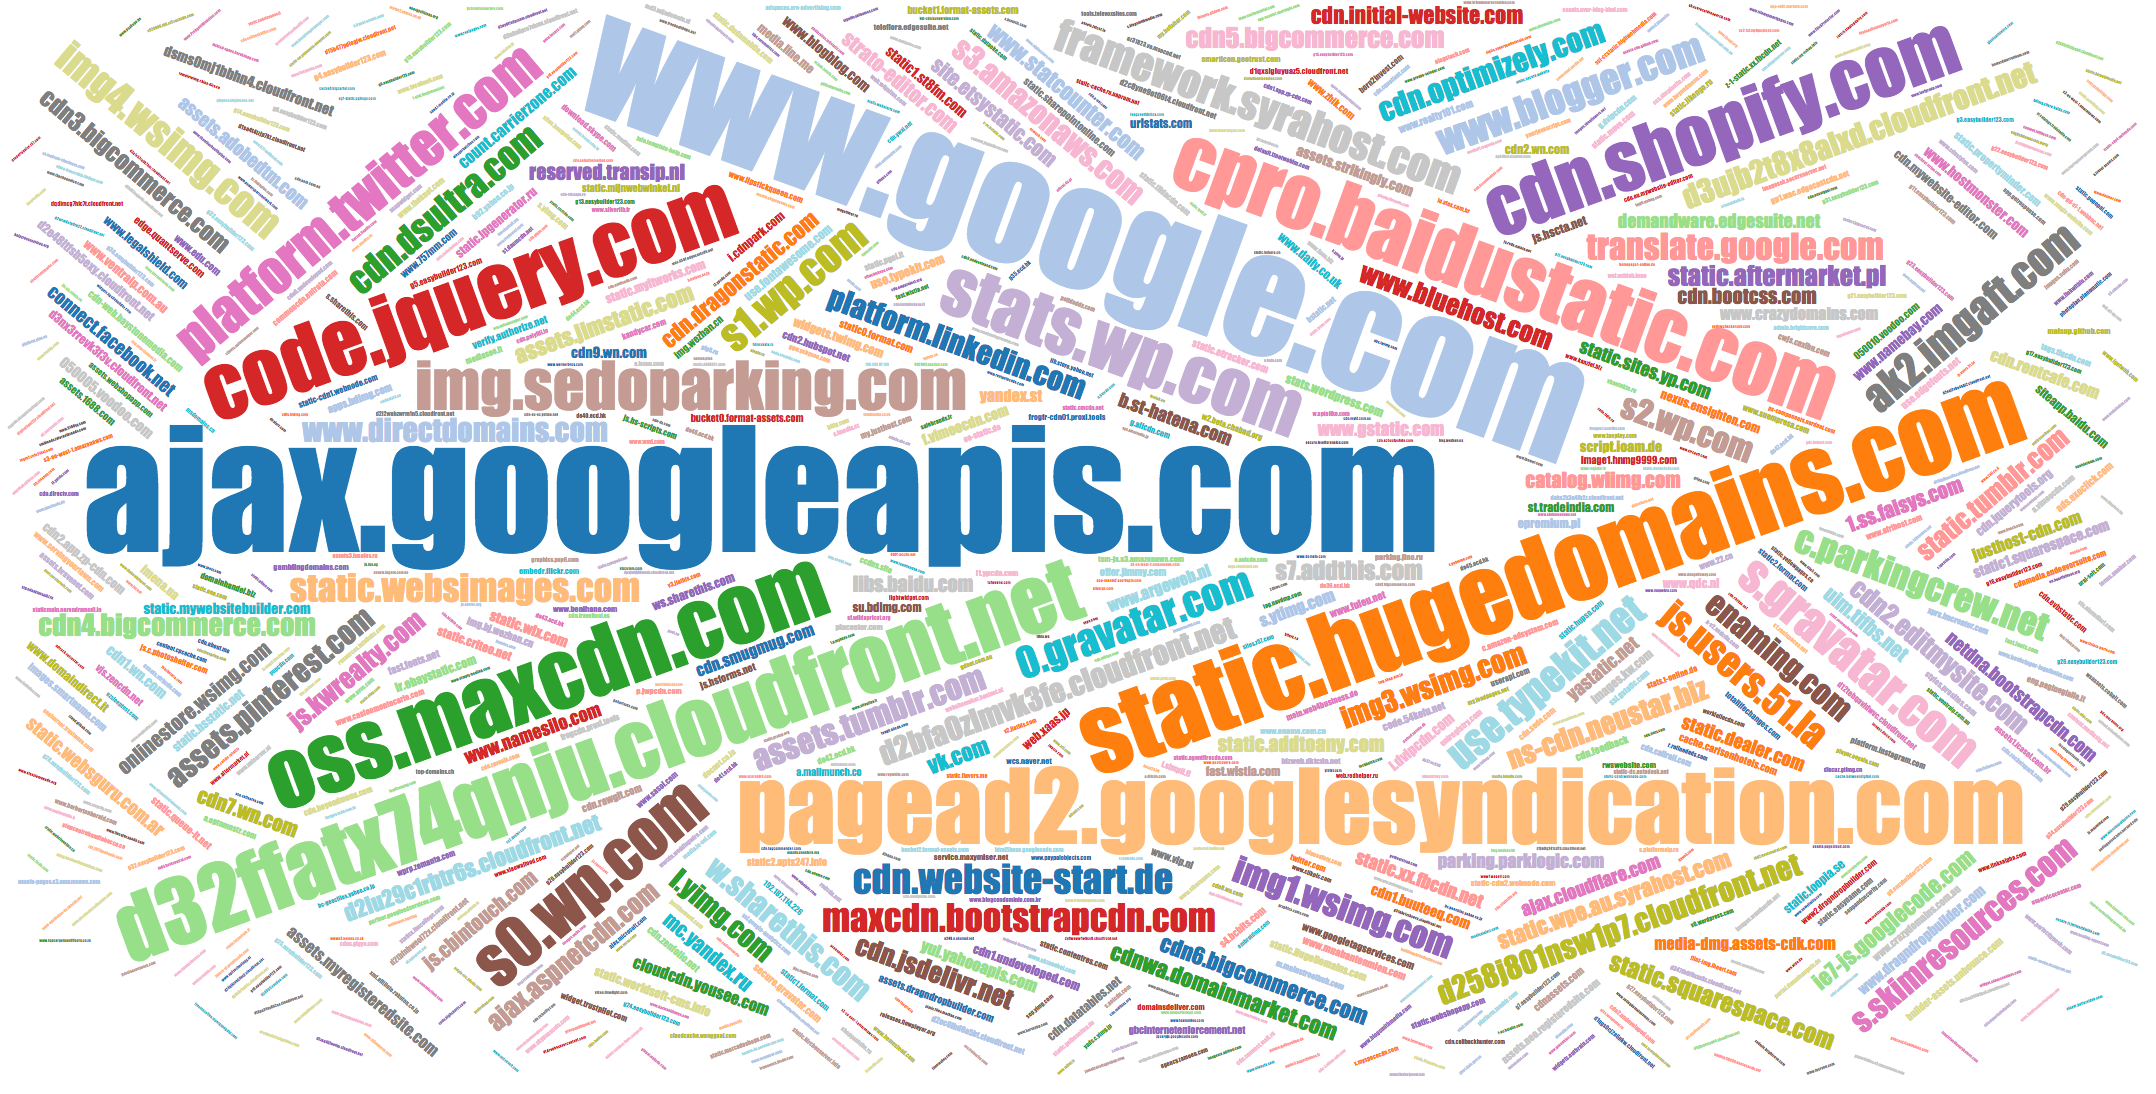 Popular names of JS domains www.google.com, www.googleadservices.com, etc.